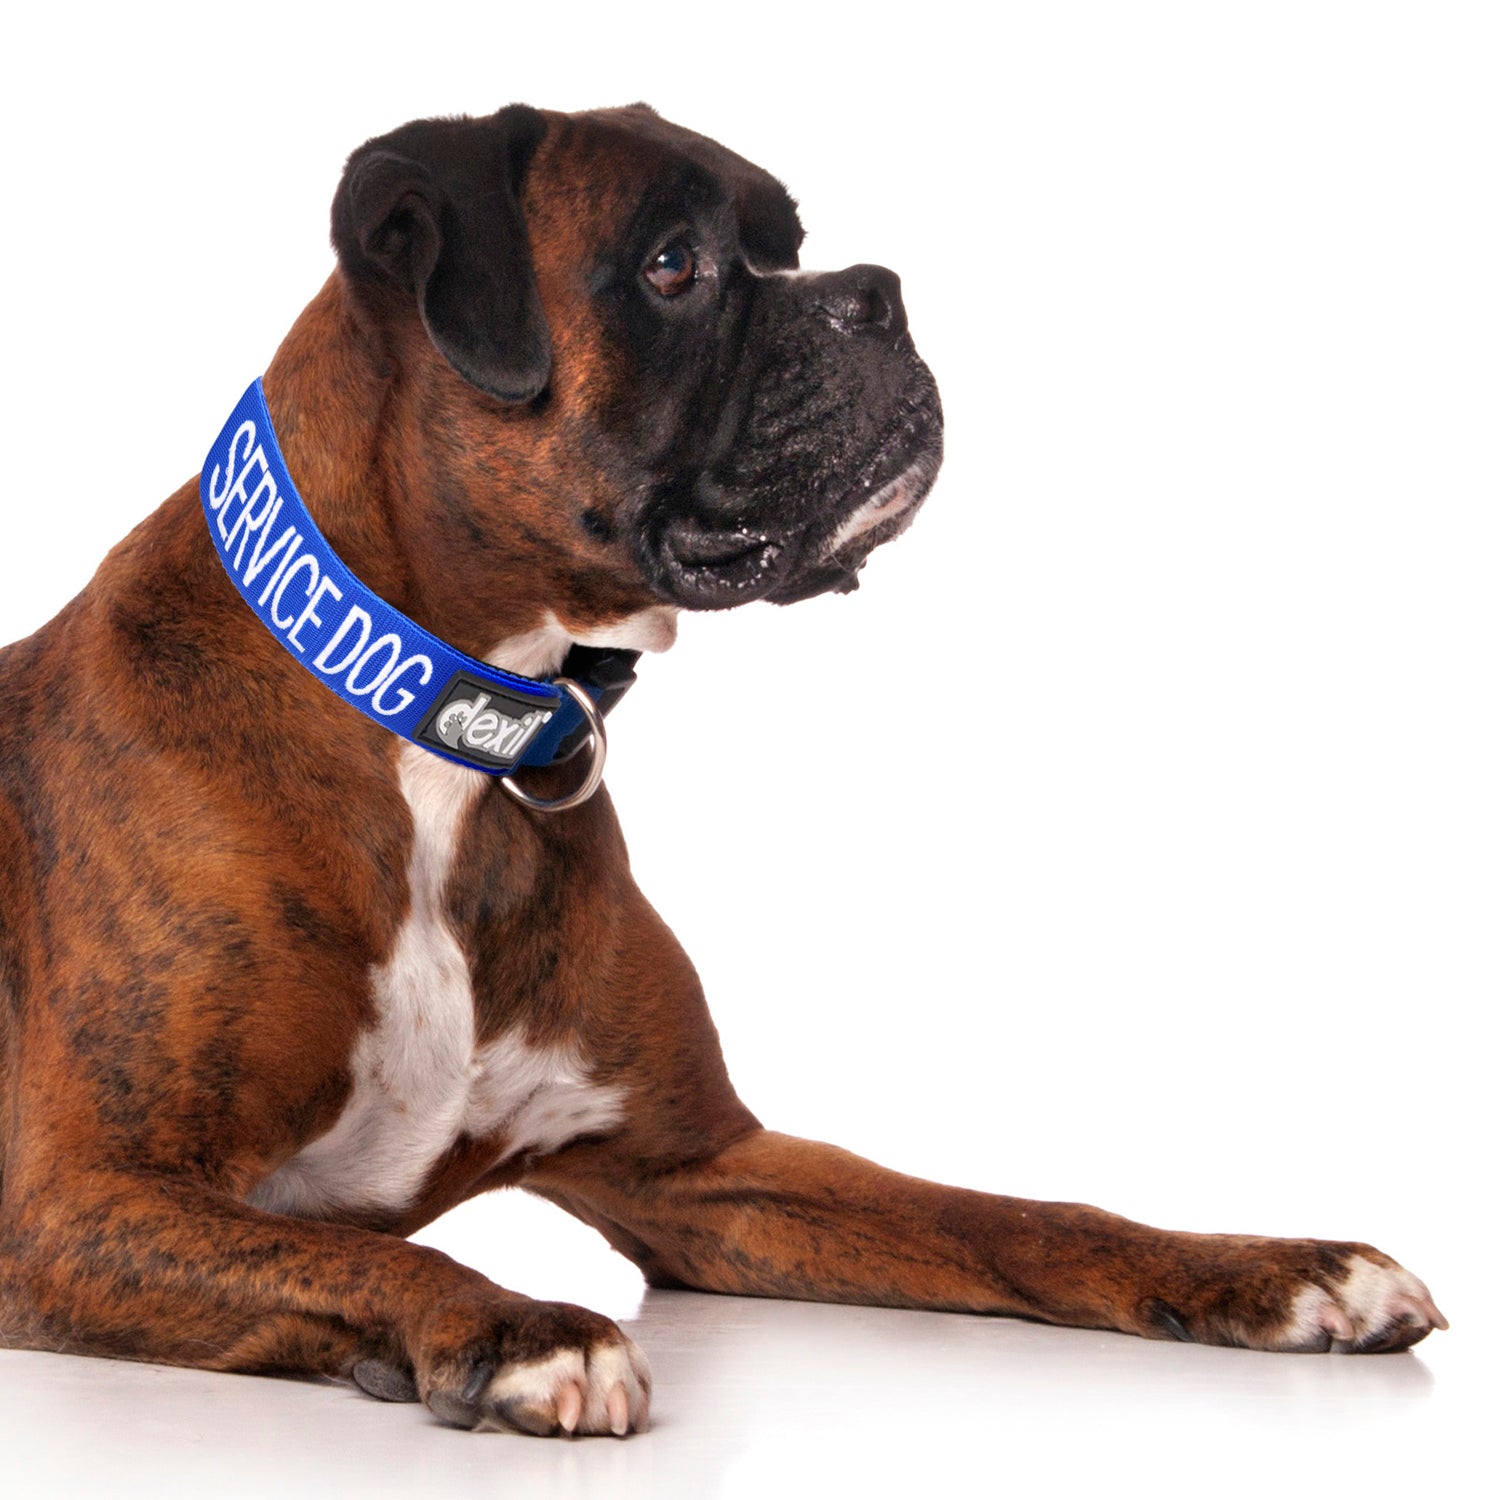 Dexil Friendly Dog Collars SERVICE DOG L/XL Clip Collar